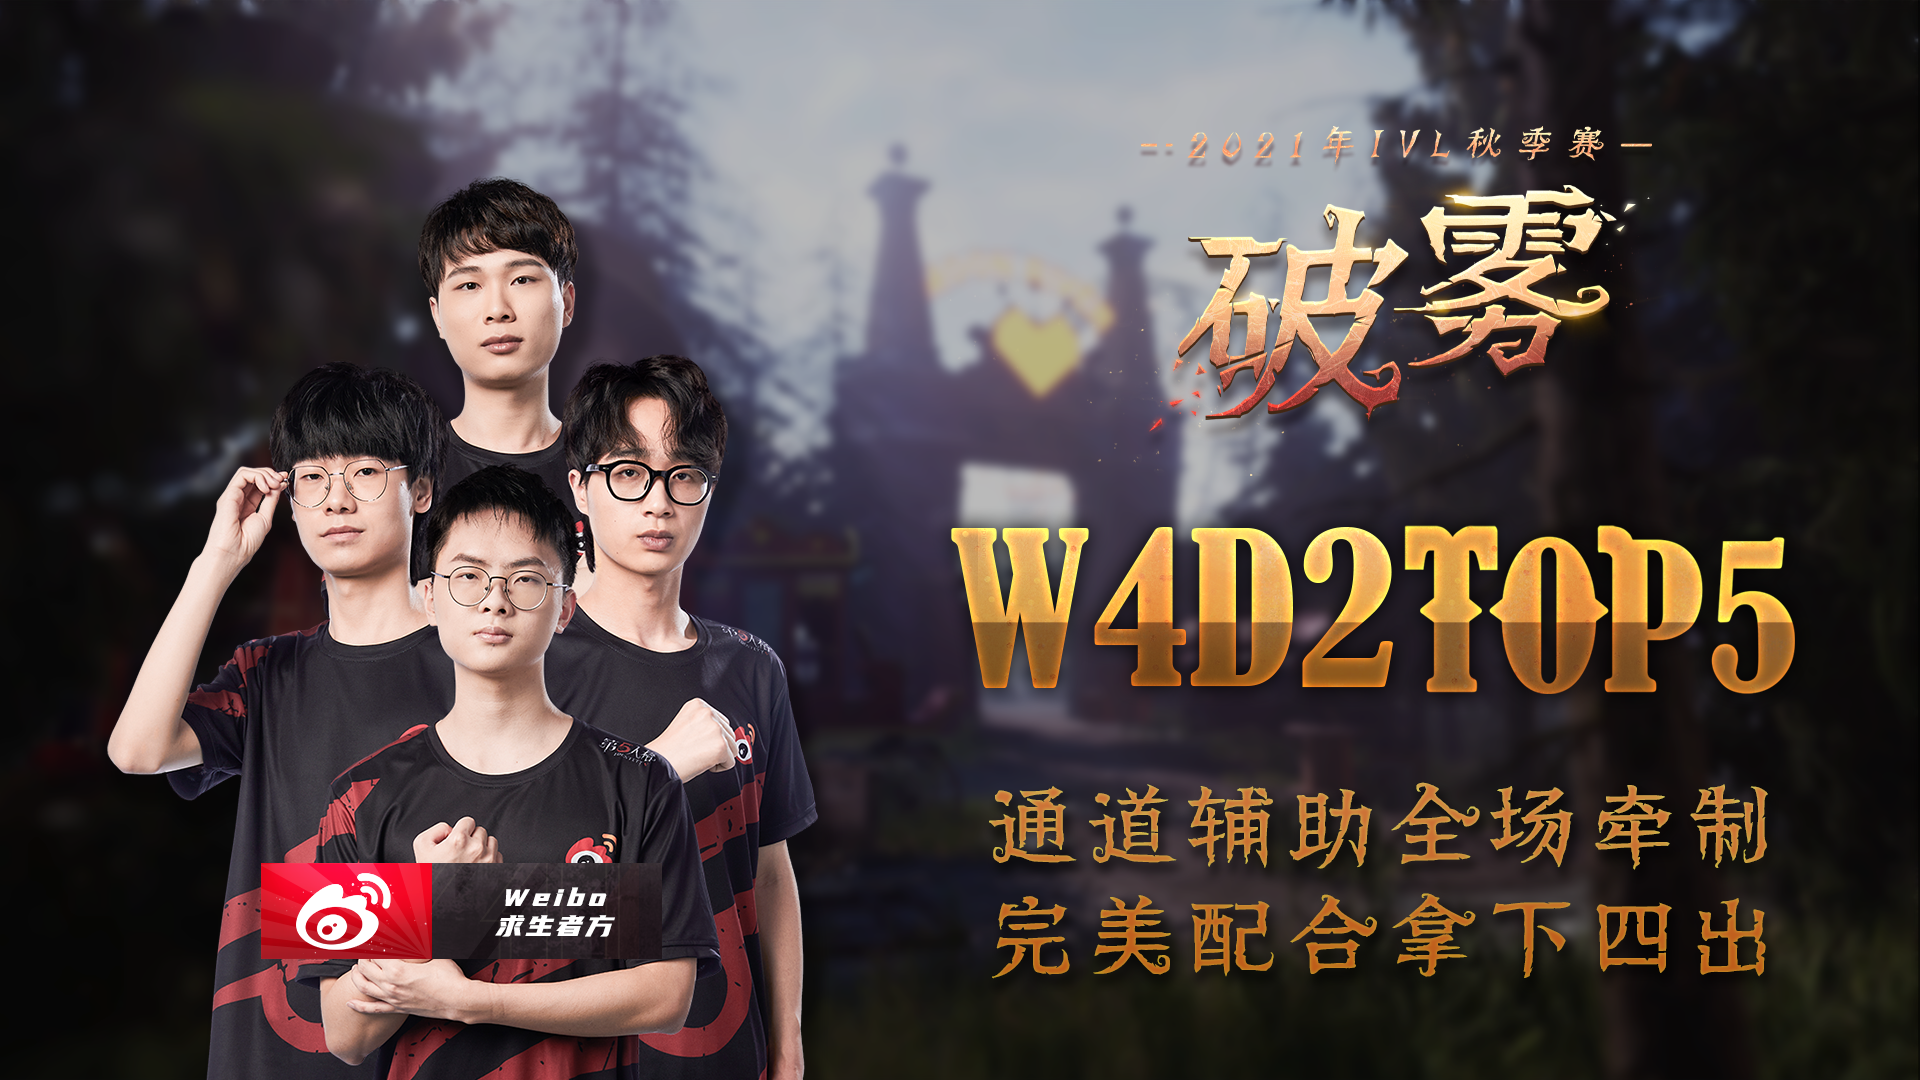 【2021IVL】秋季赛W4D2 TOP5：Weibo求生者完美配合拿下四出